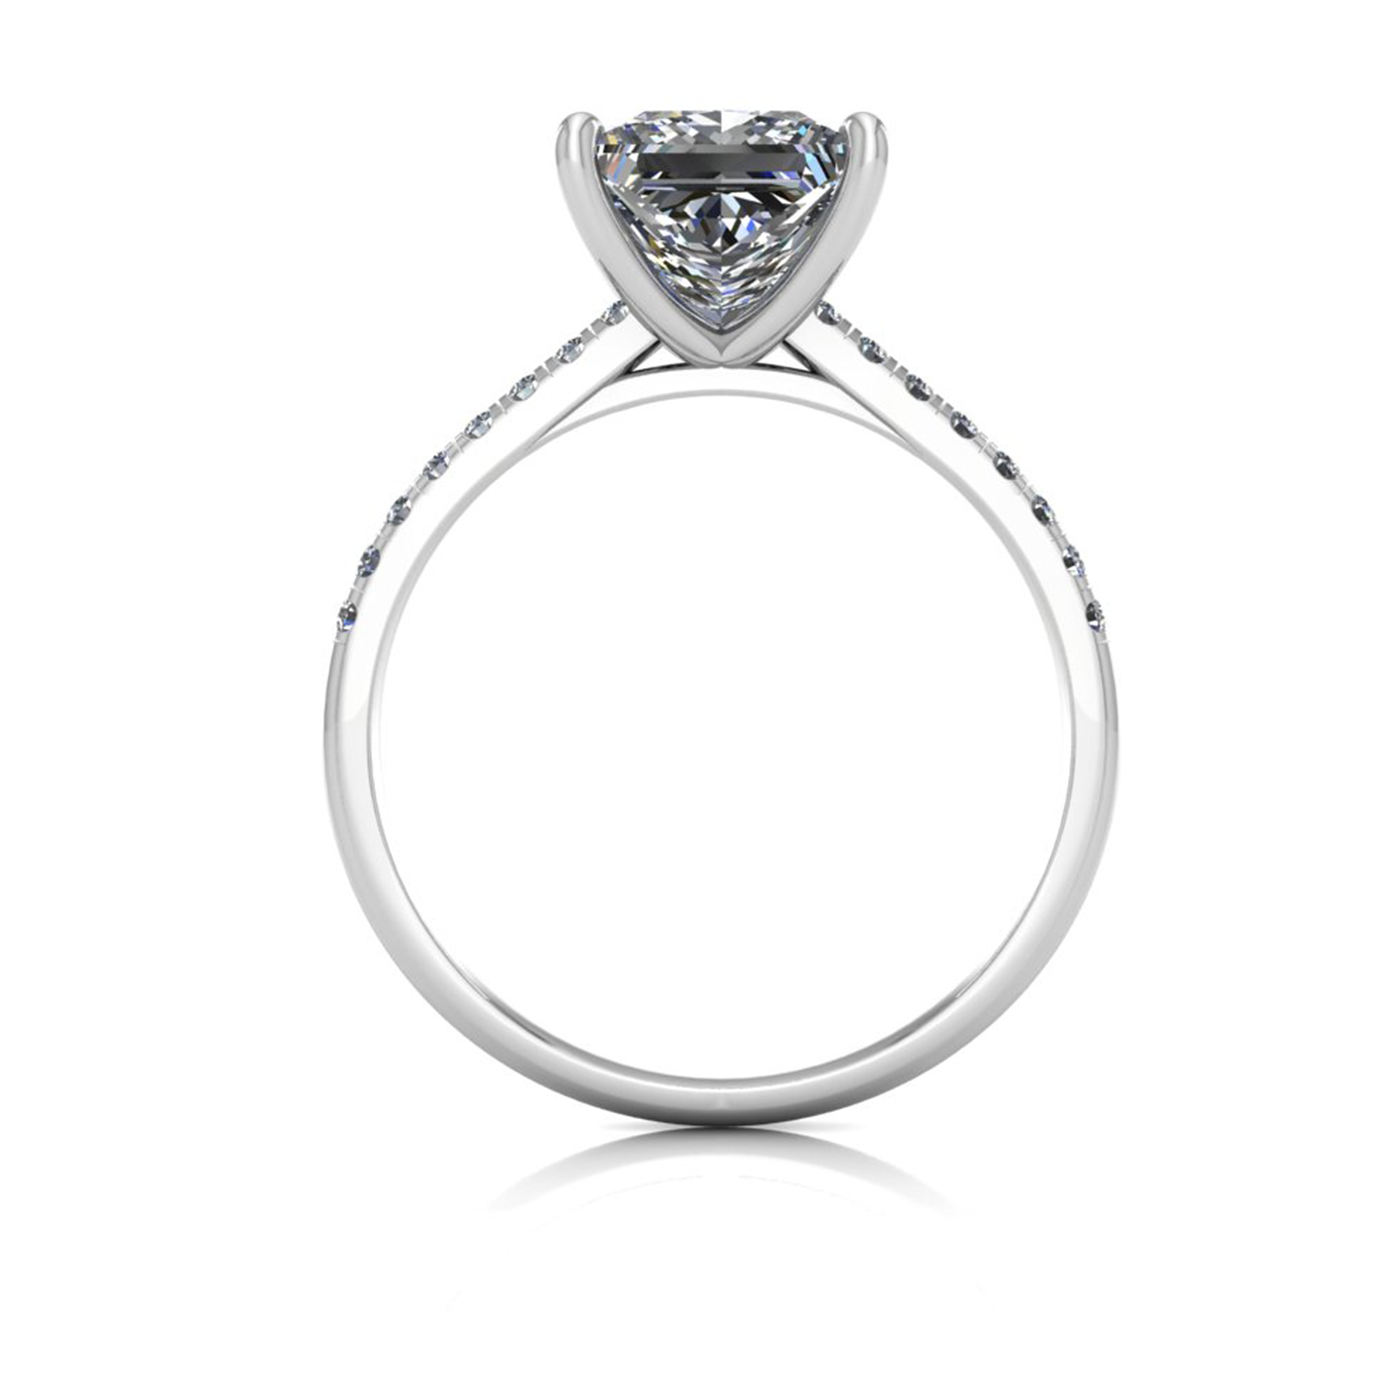 18k white gold  2,00 ct 4 prongs princess cut diamond engagement ring with whisper thin pavÉ set band